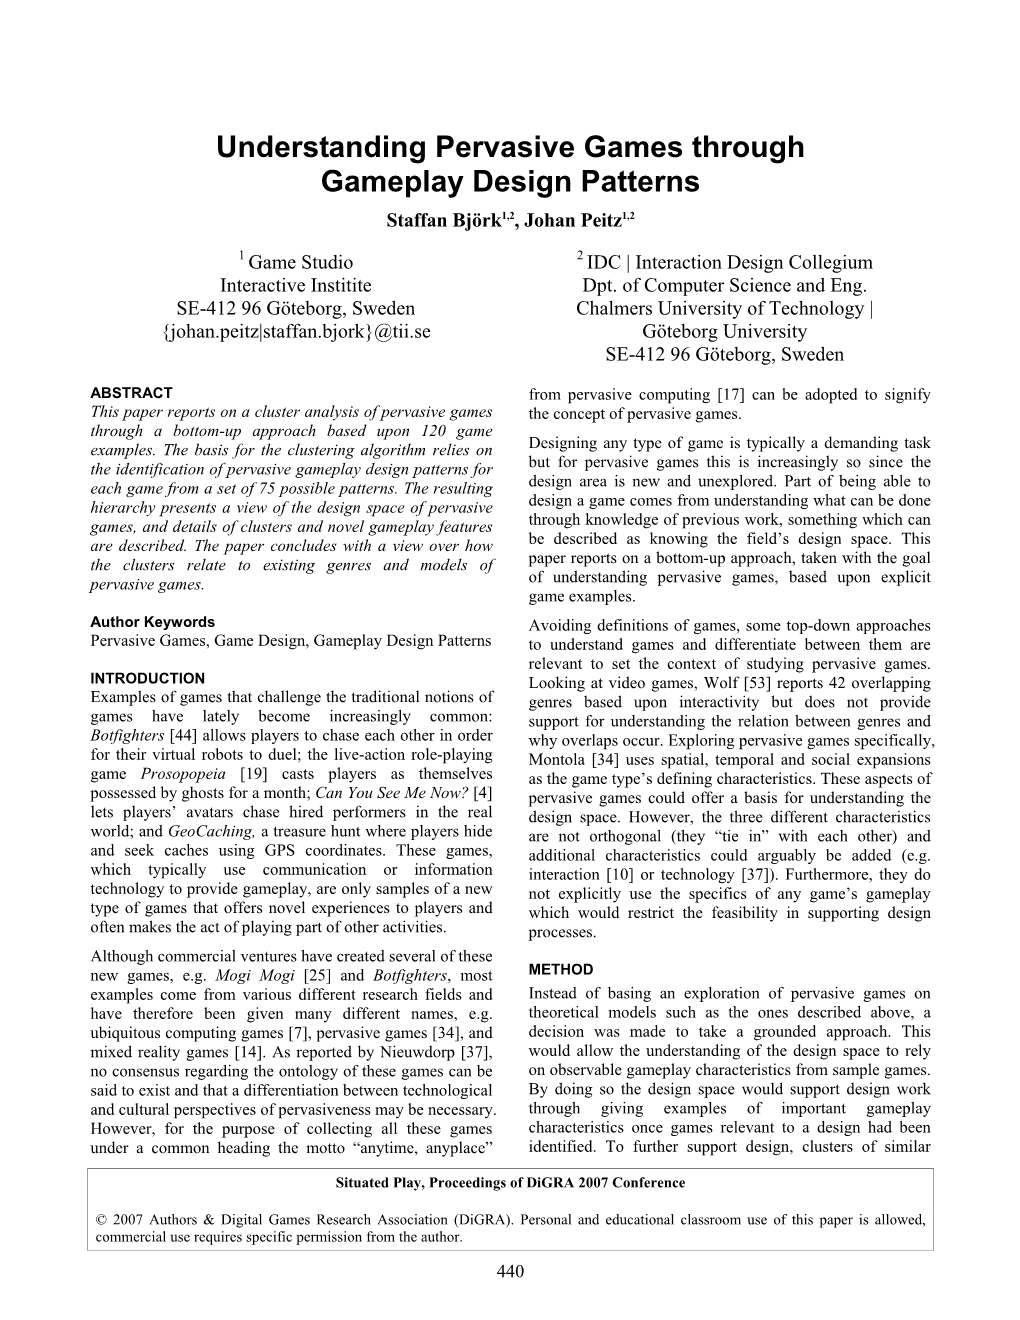 Understanding Pervasive Games Through Gameplay Design Patterns Staffan Björk1,2, Johan Peitz1,2